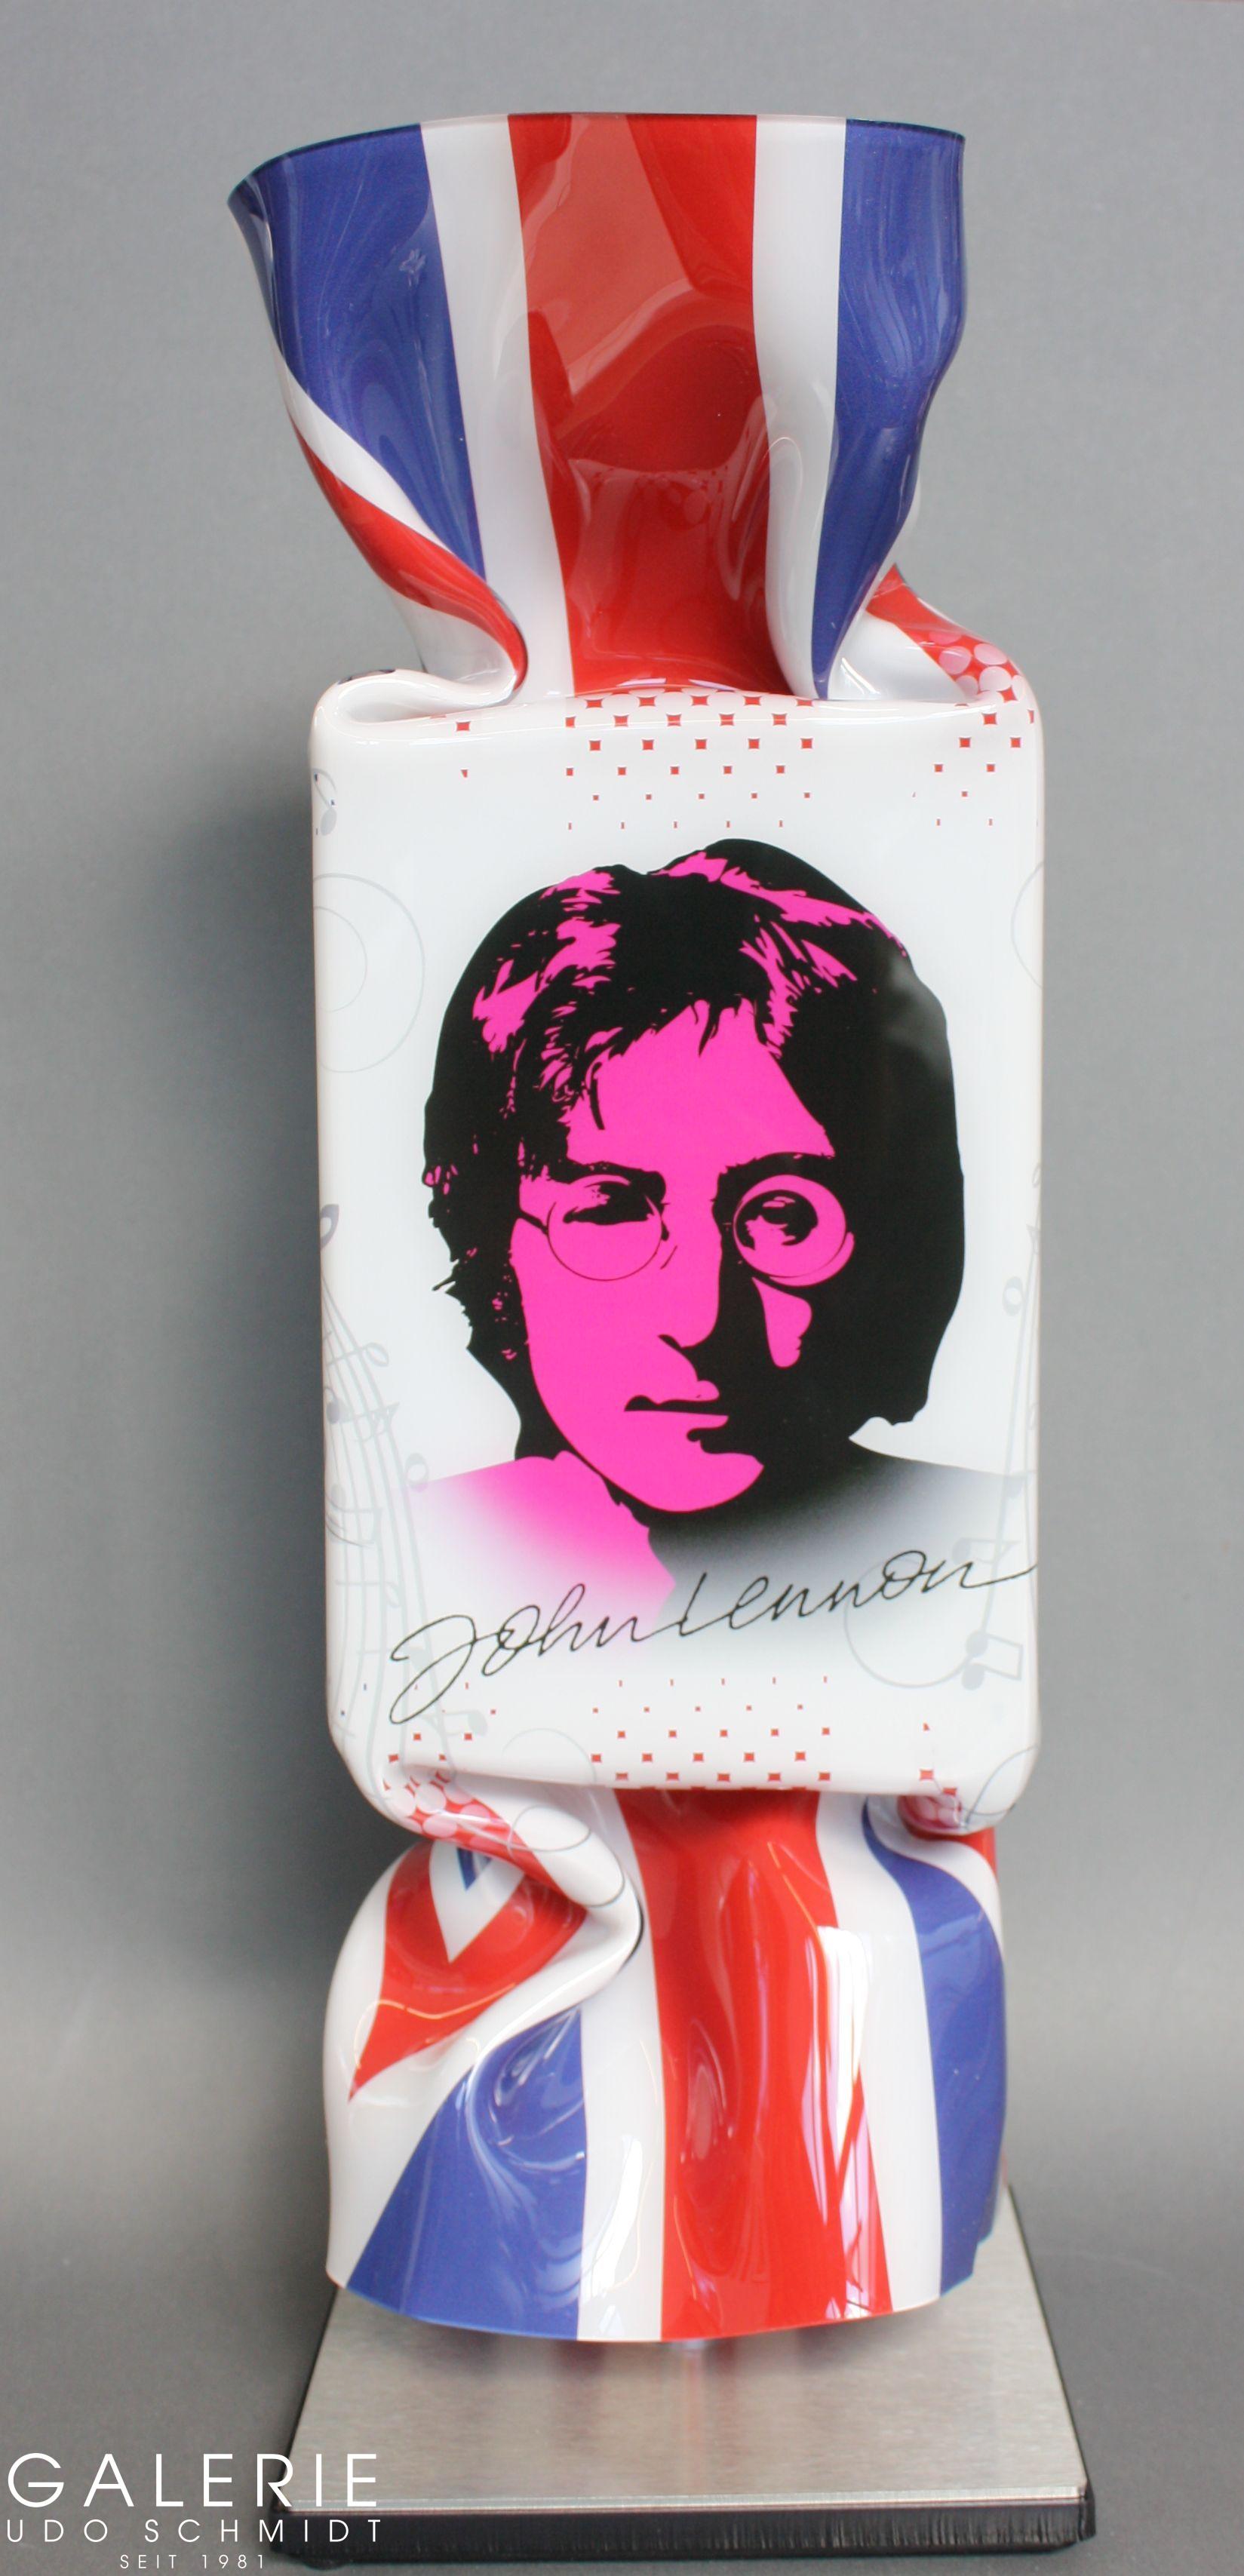 Art Candy Toffee - John Lennon